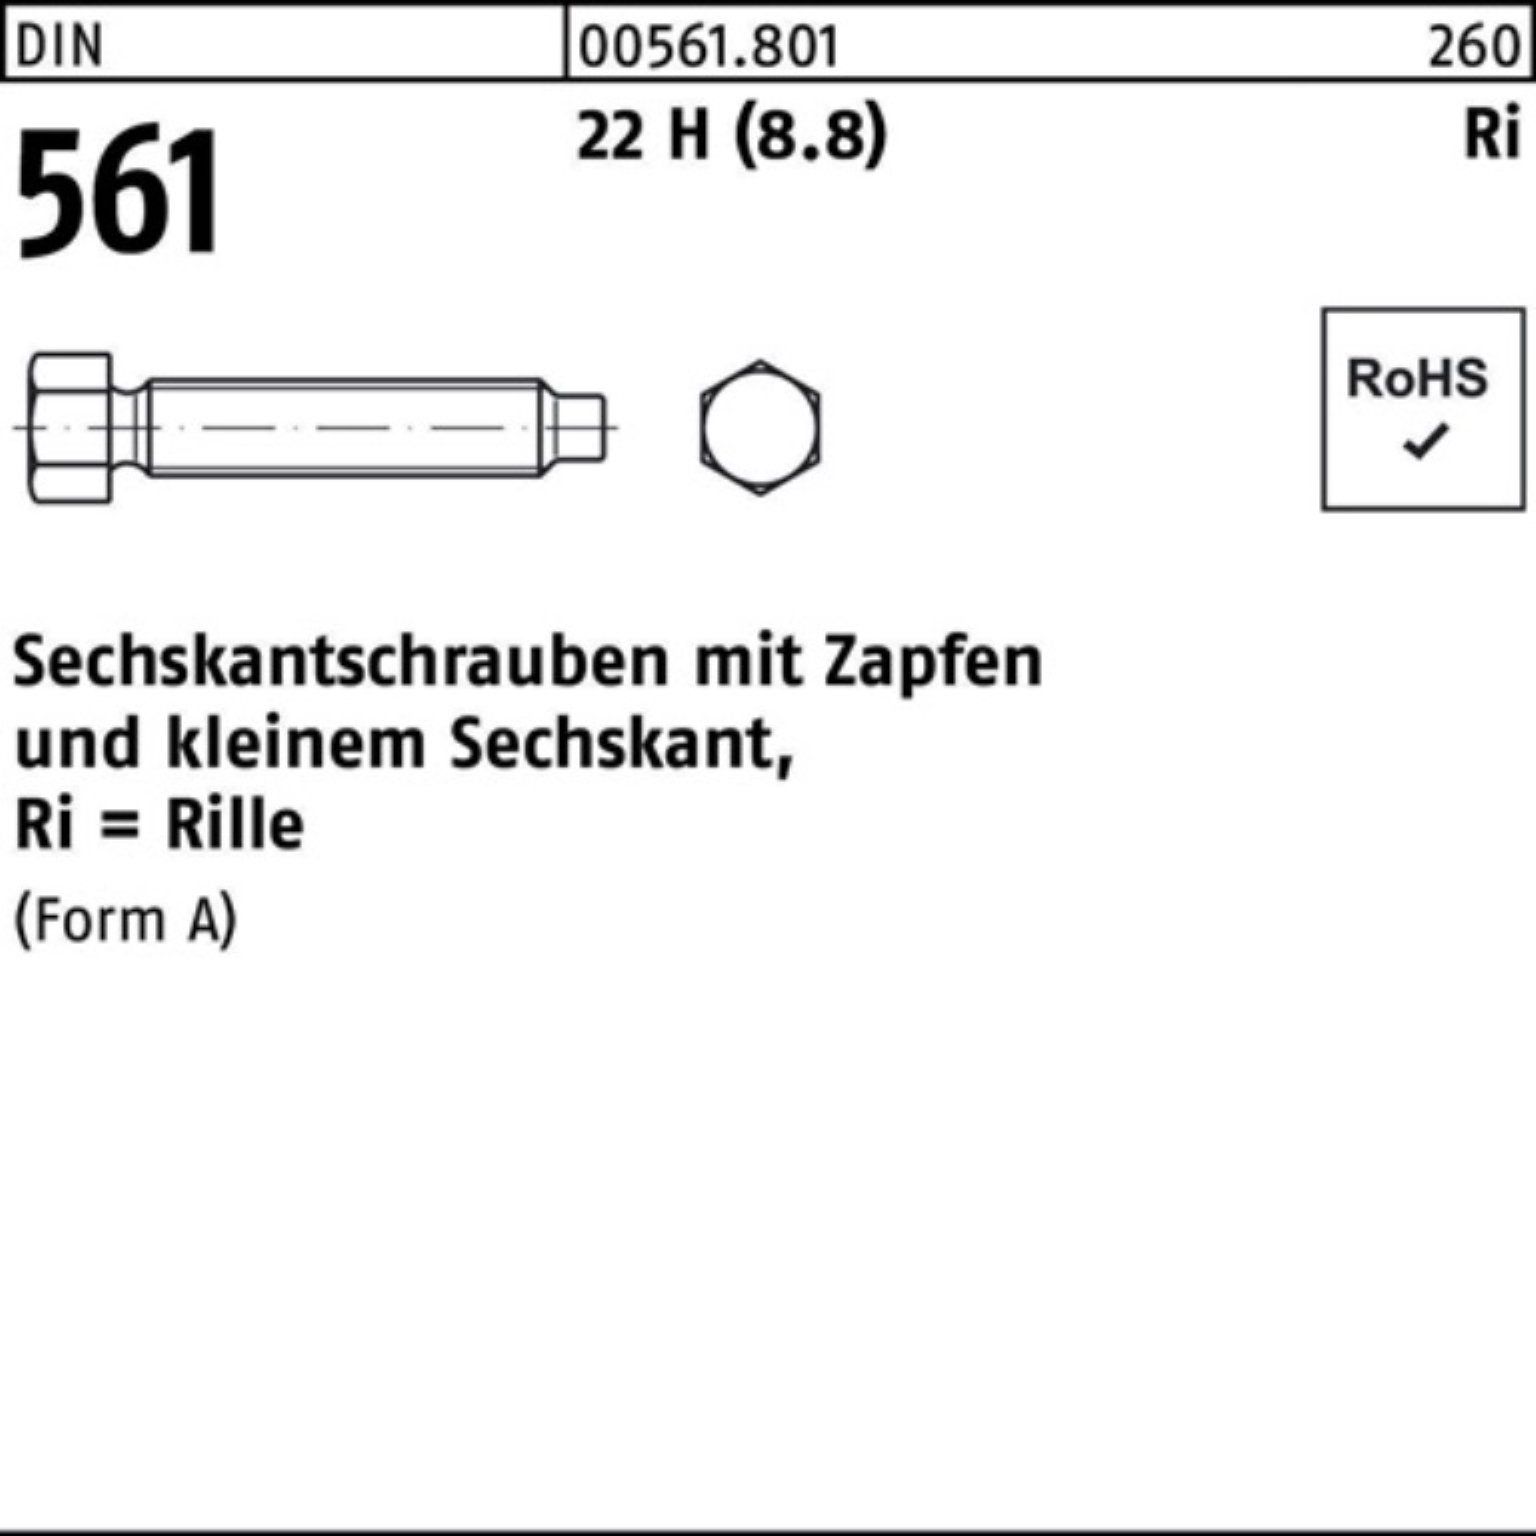 DIN Pack Sechskantschraube (8.8) Zapfen H 100er 561 Sechskantschraube 6x 100 St 22 25 Reyher AM